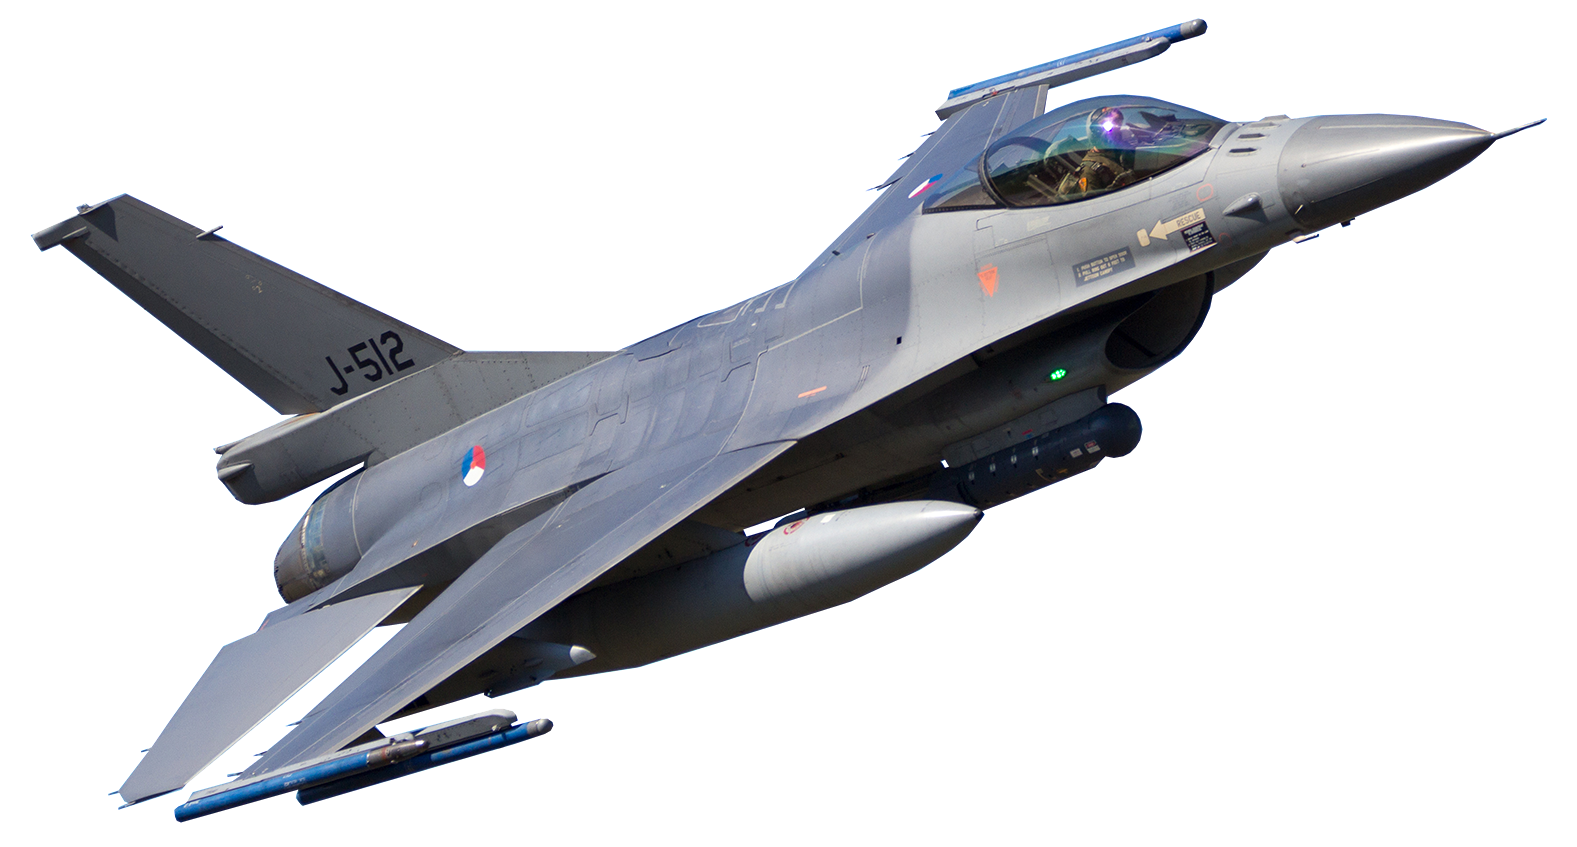 jet fighter png images download crazypngm crazy png images download #29226